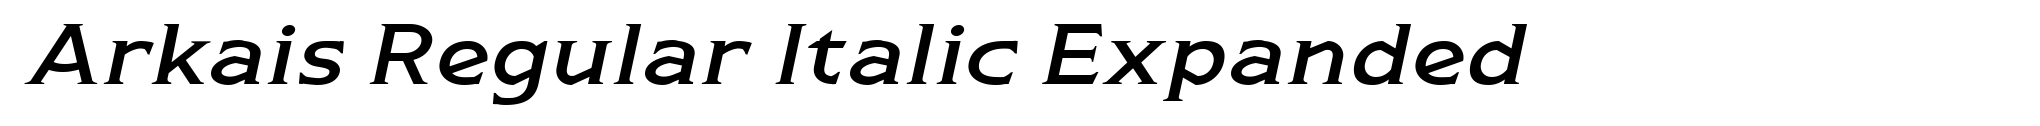 Arkais Regular Italic Expanded image